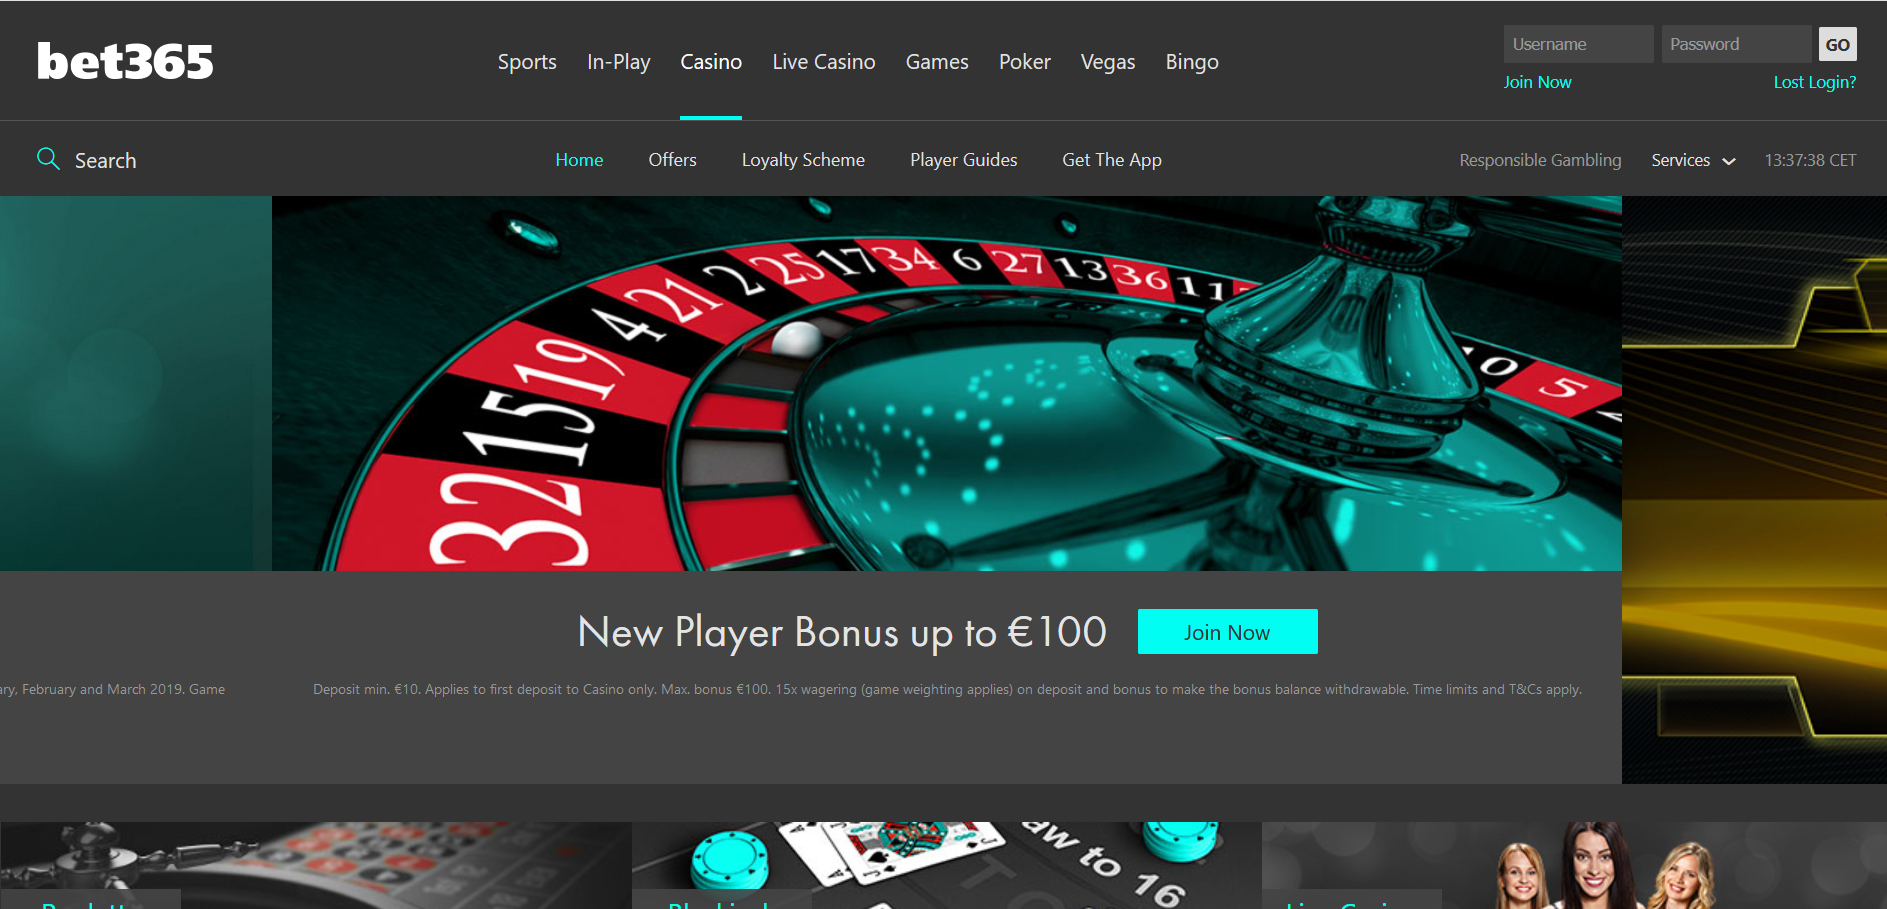 Online casino sports betting topic 1win слоты зеркало рабочее на сегодня